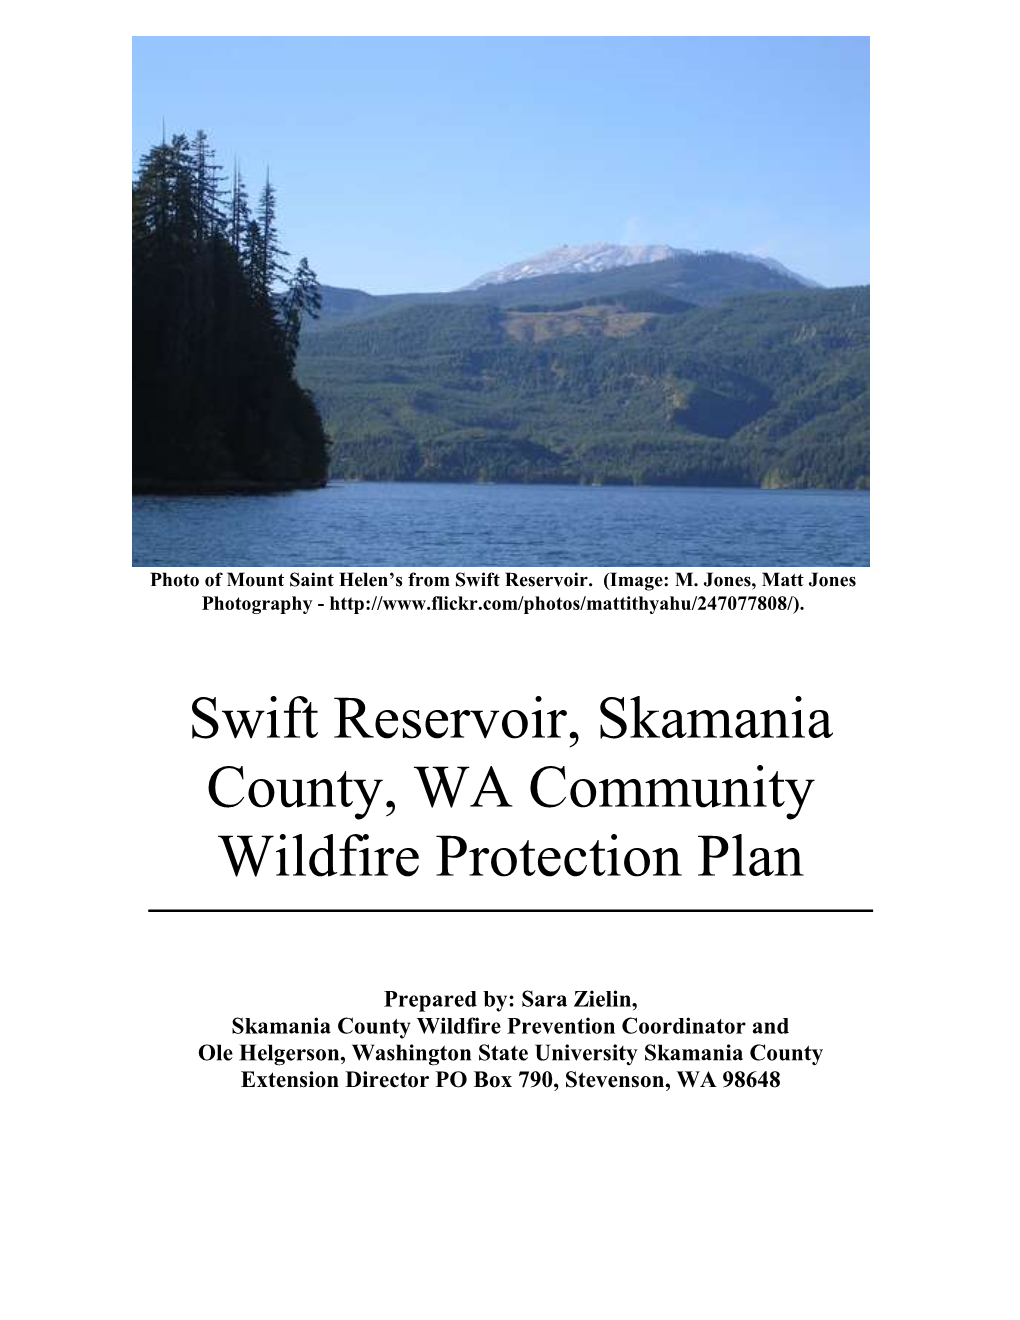 Swift Reservoir, Skamania County, WA Community Wildfire Protection